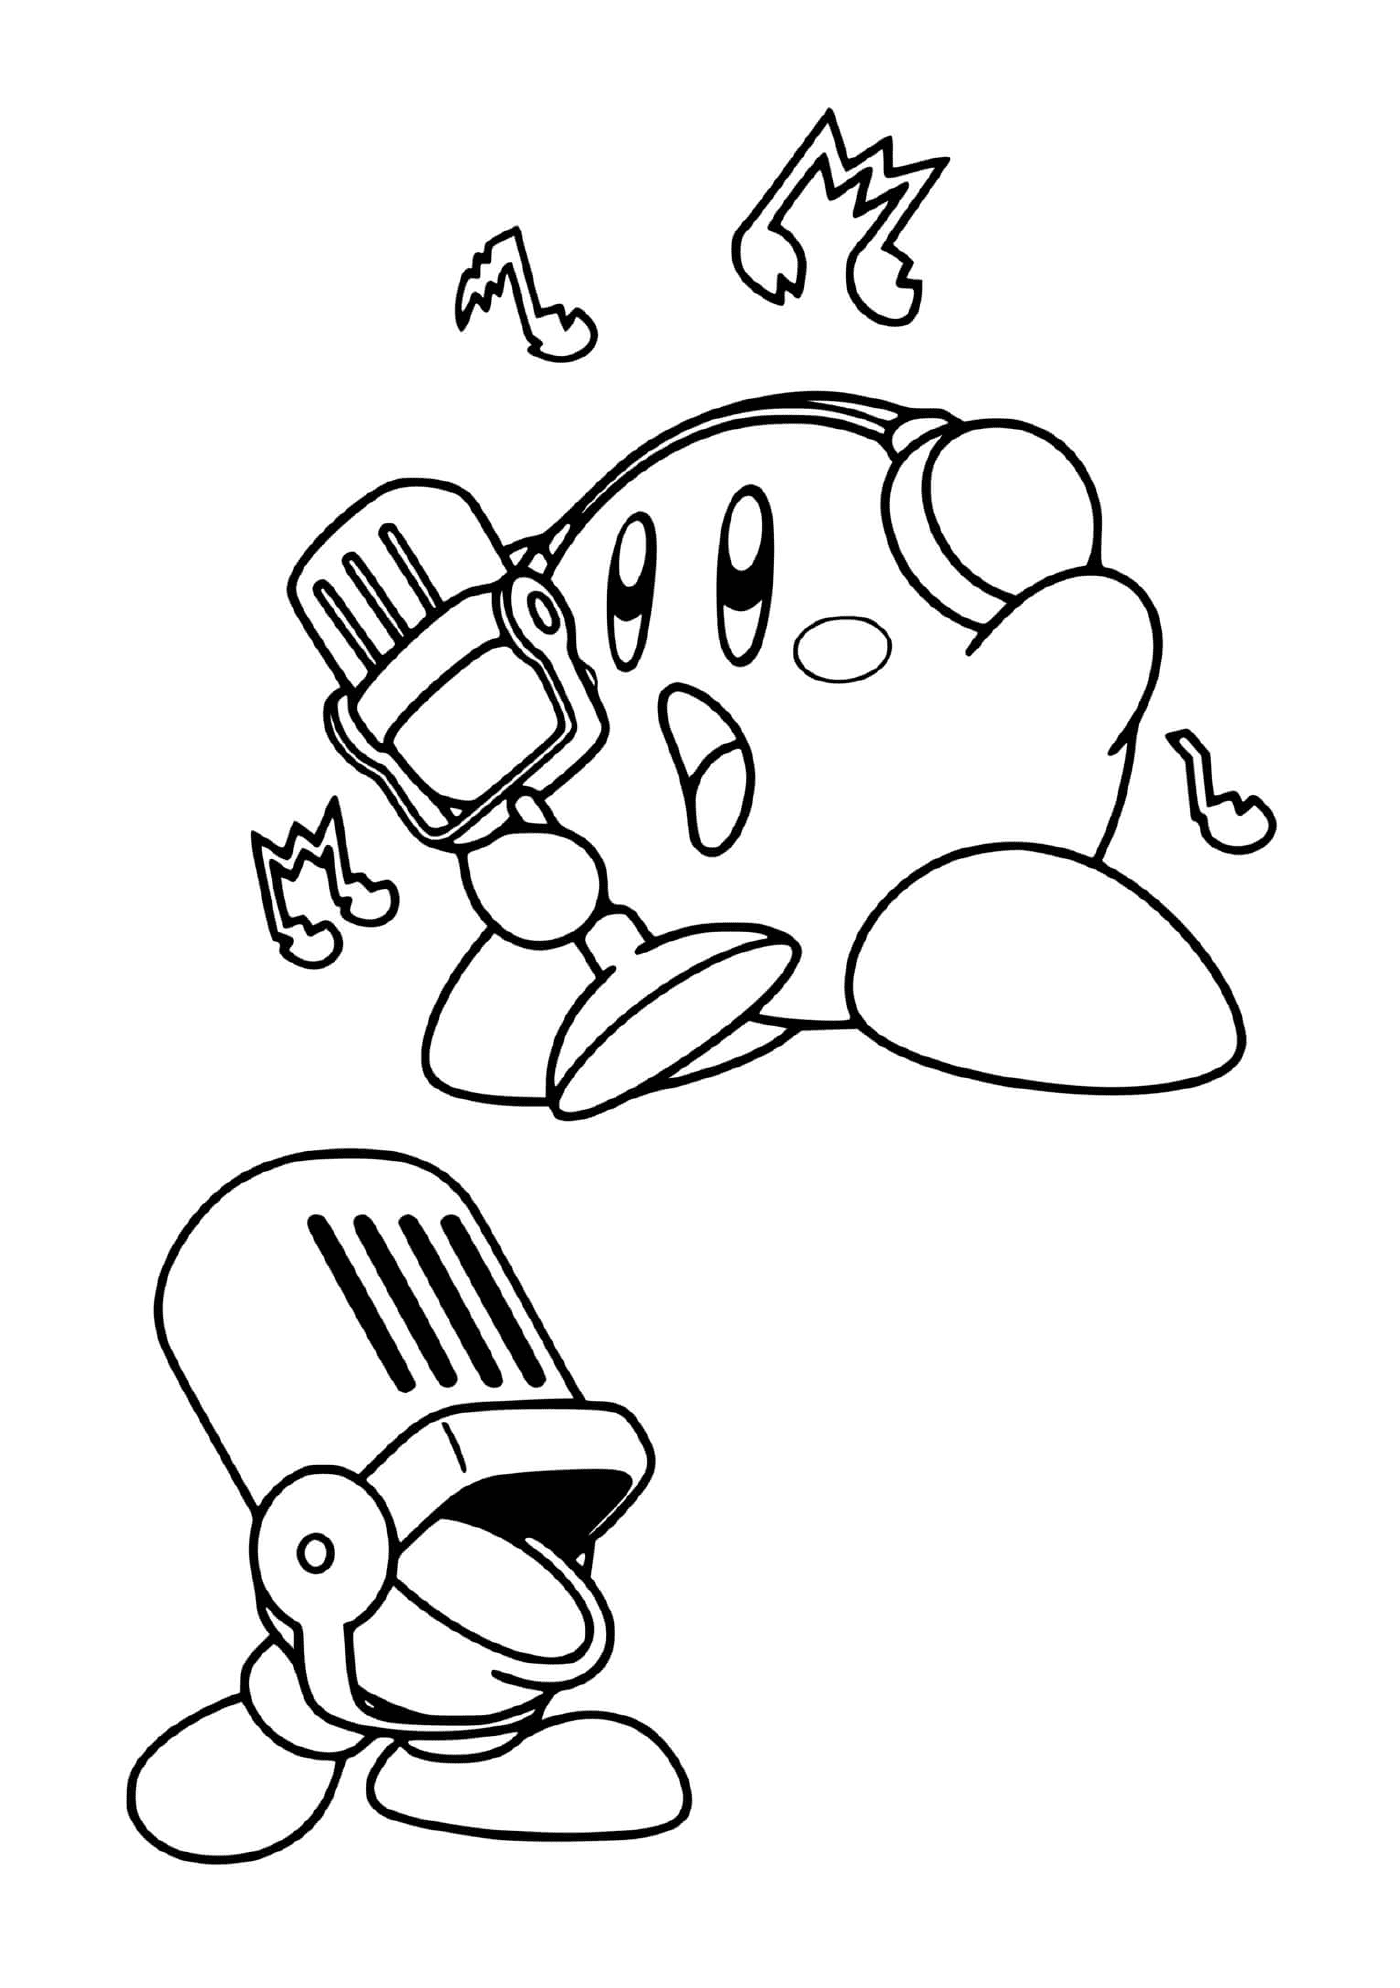  Kirby talentoso con micrófono 